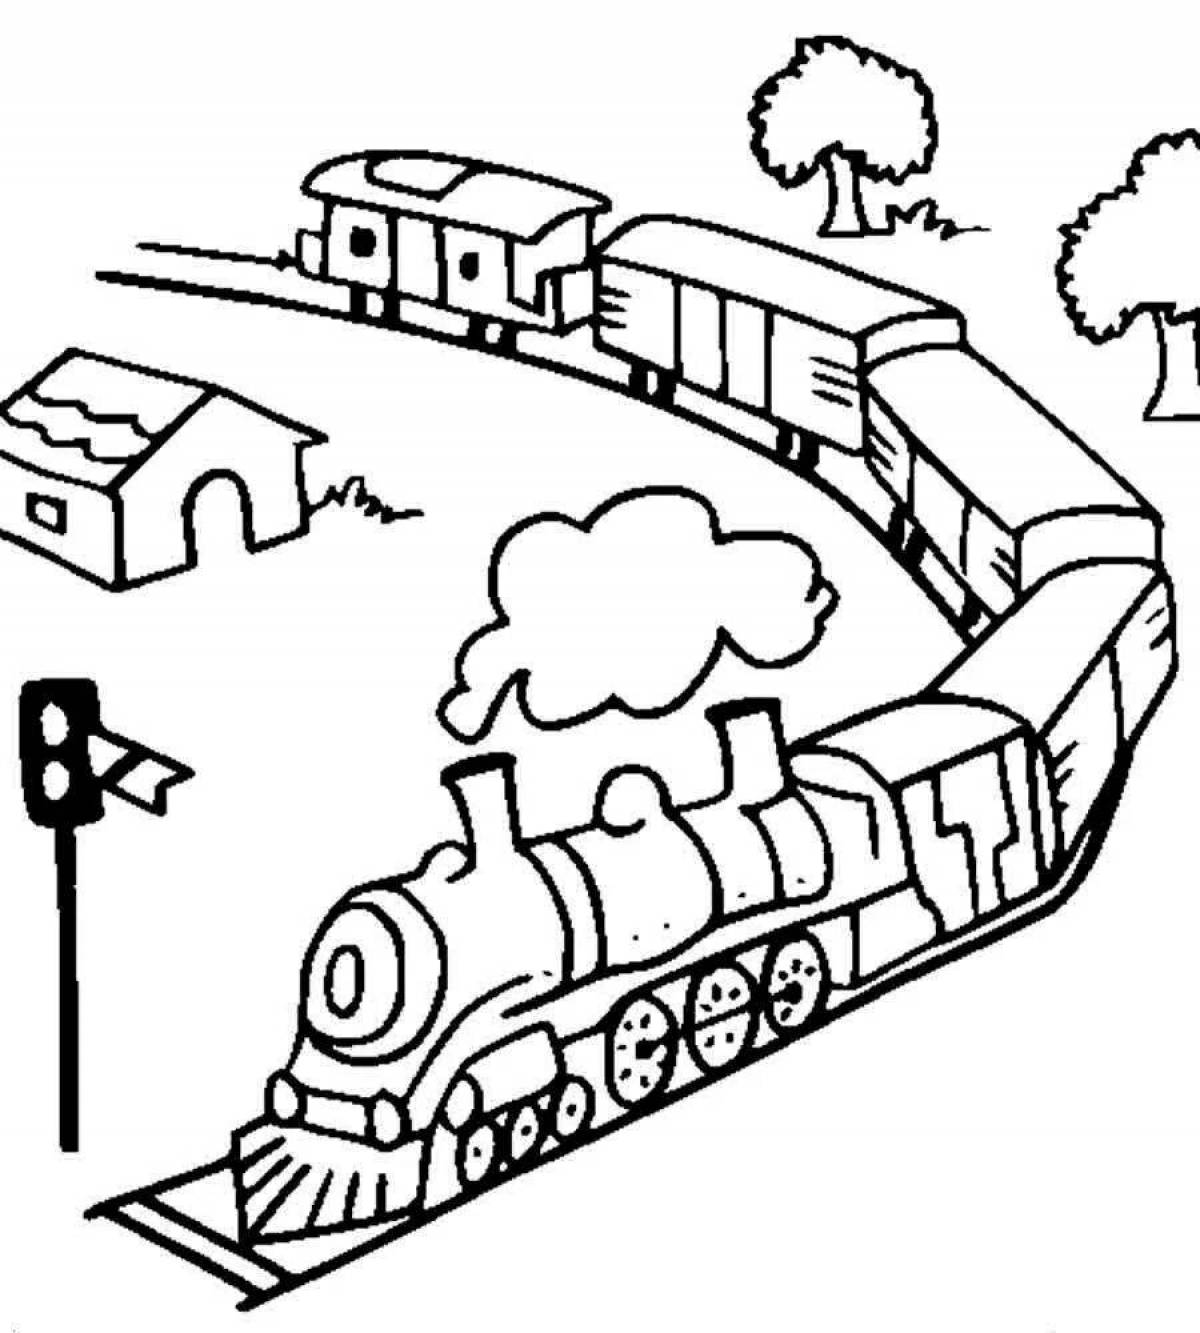 Cute rail transport coloring book